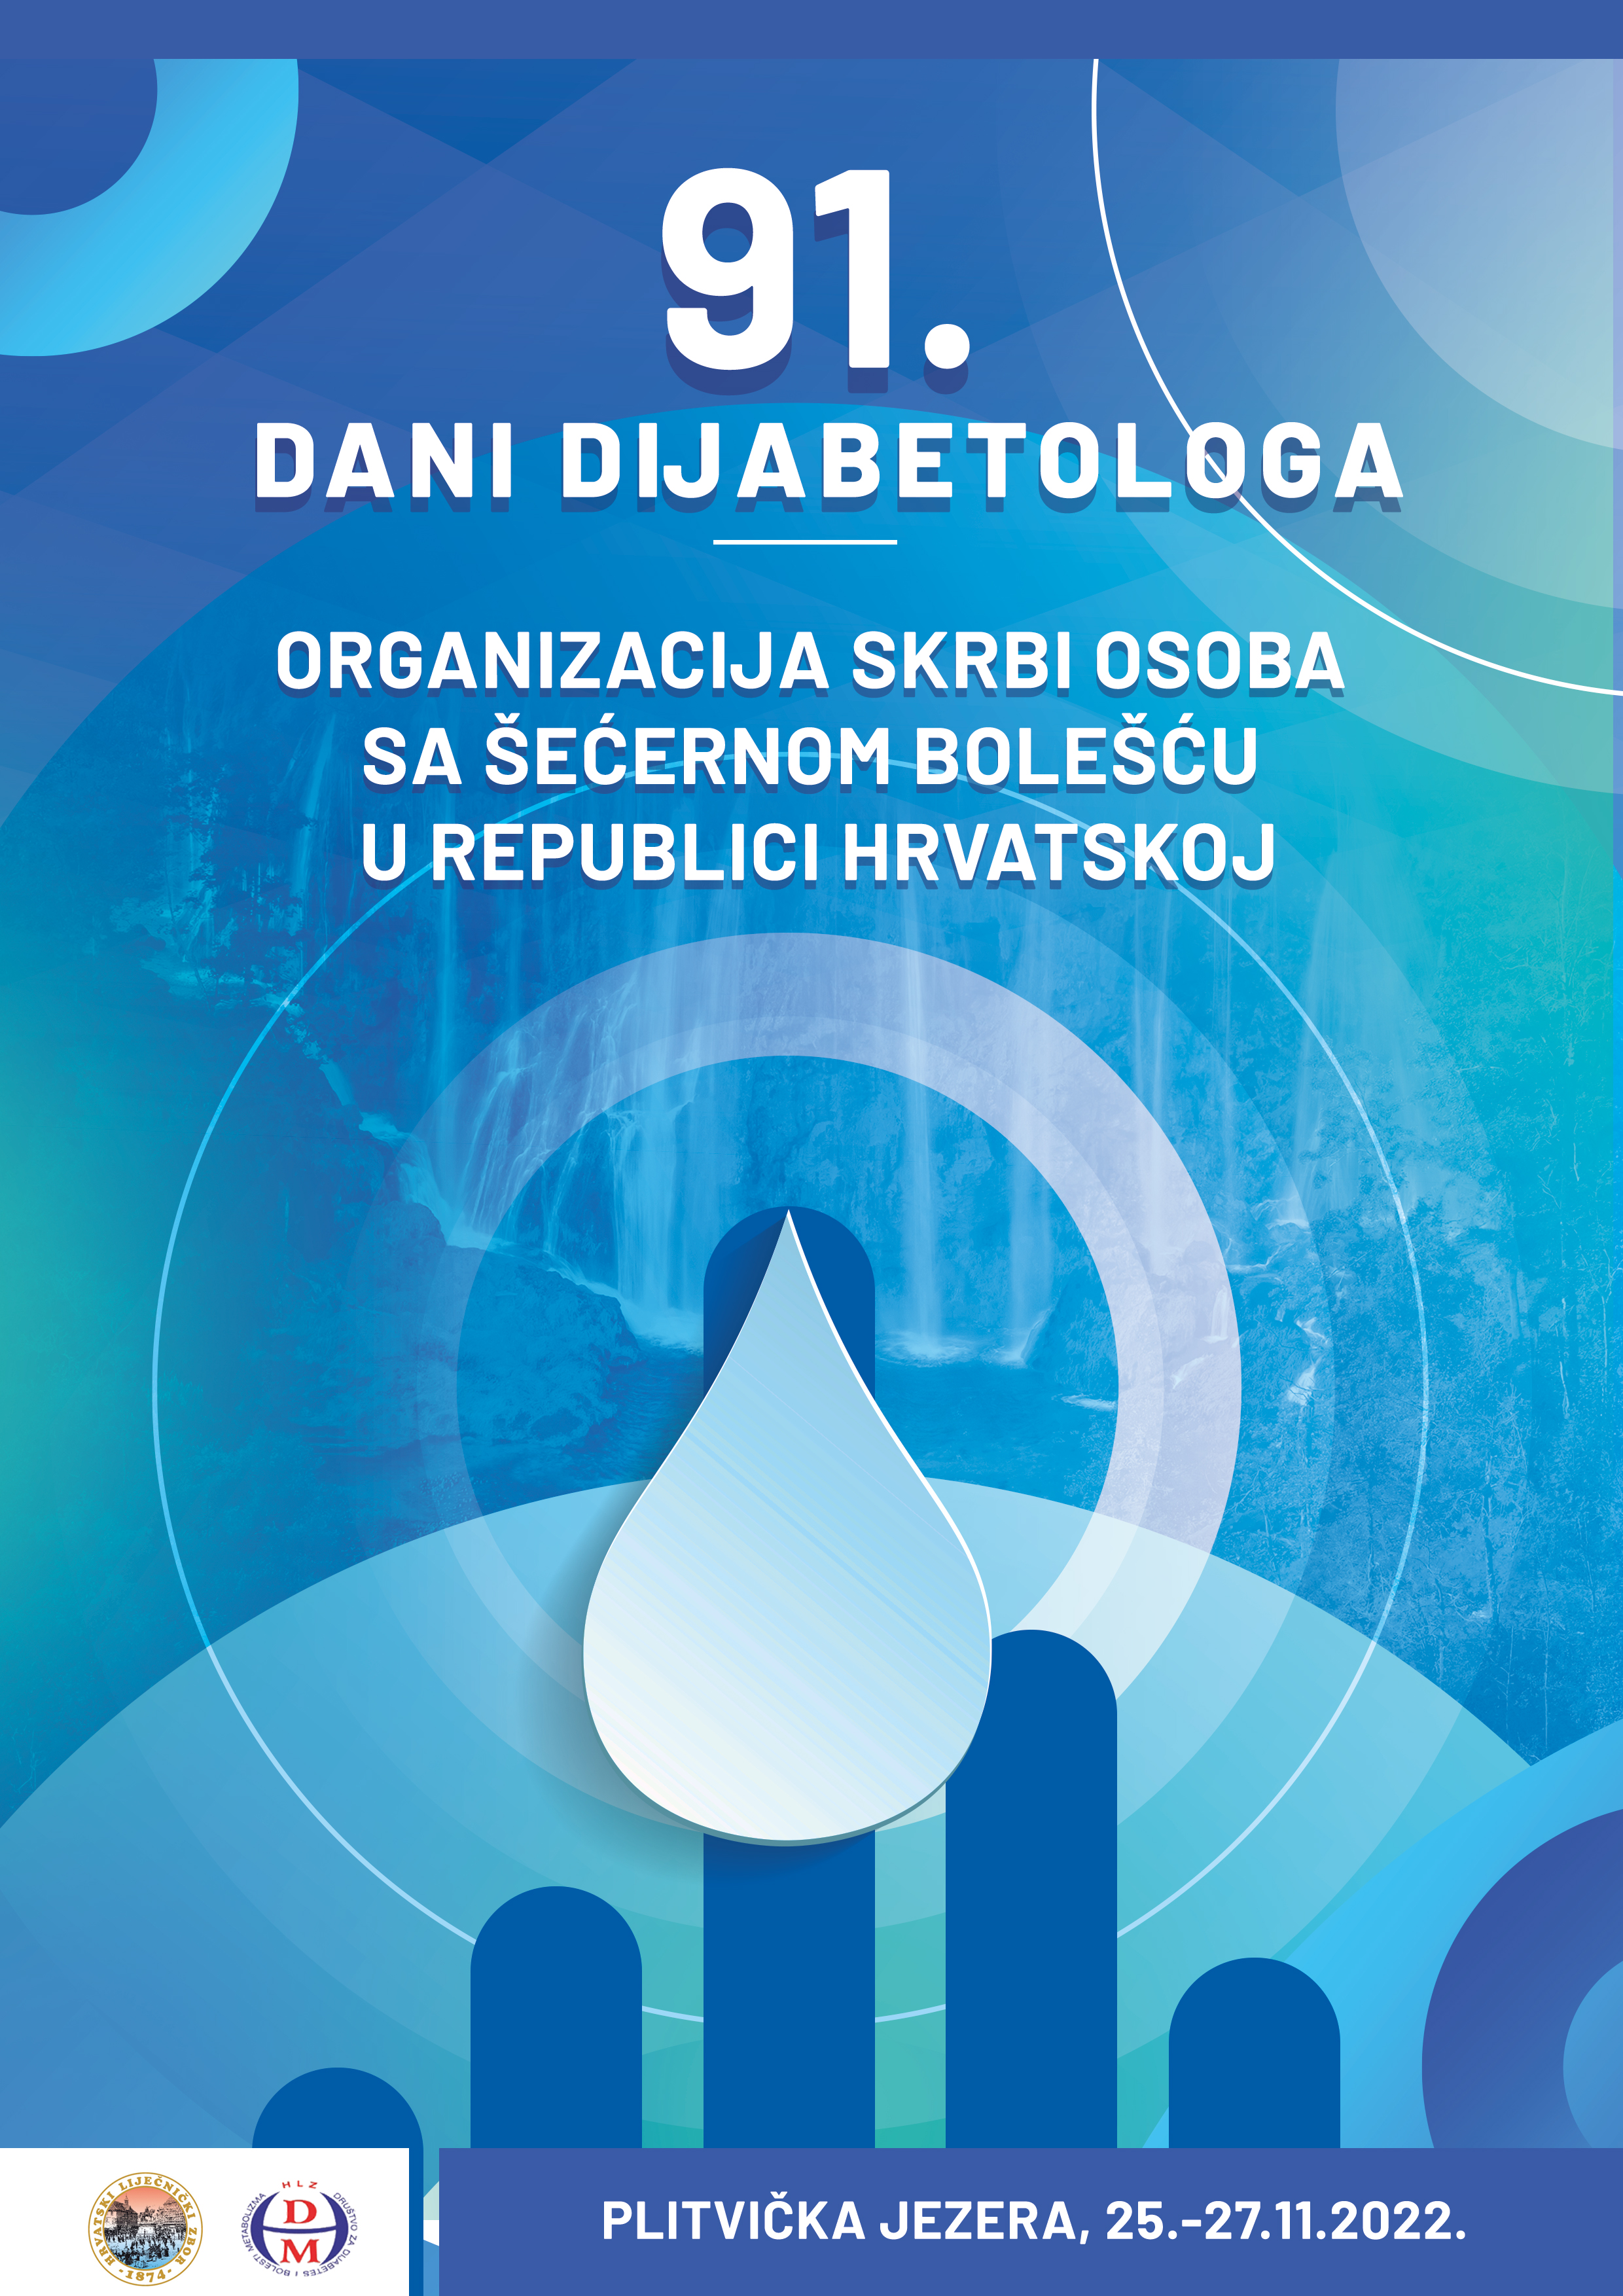 91. Dani dijabetologa, Plitvička Jezera 25.-27.11.2022.